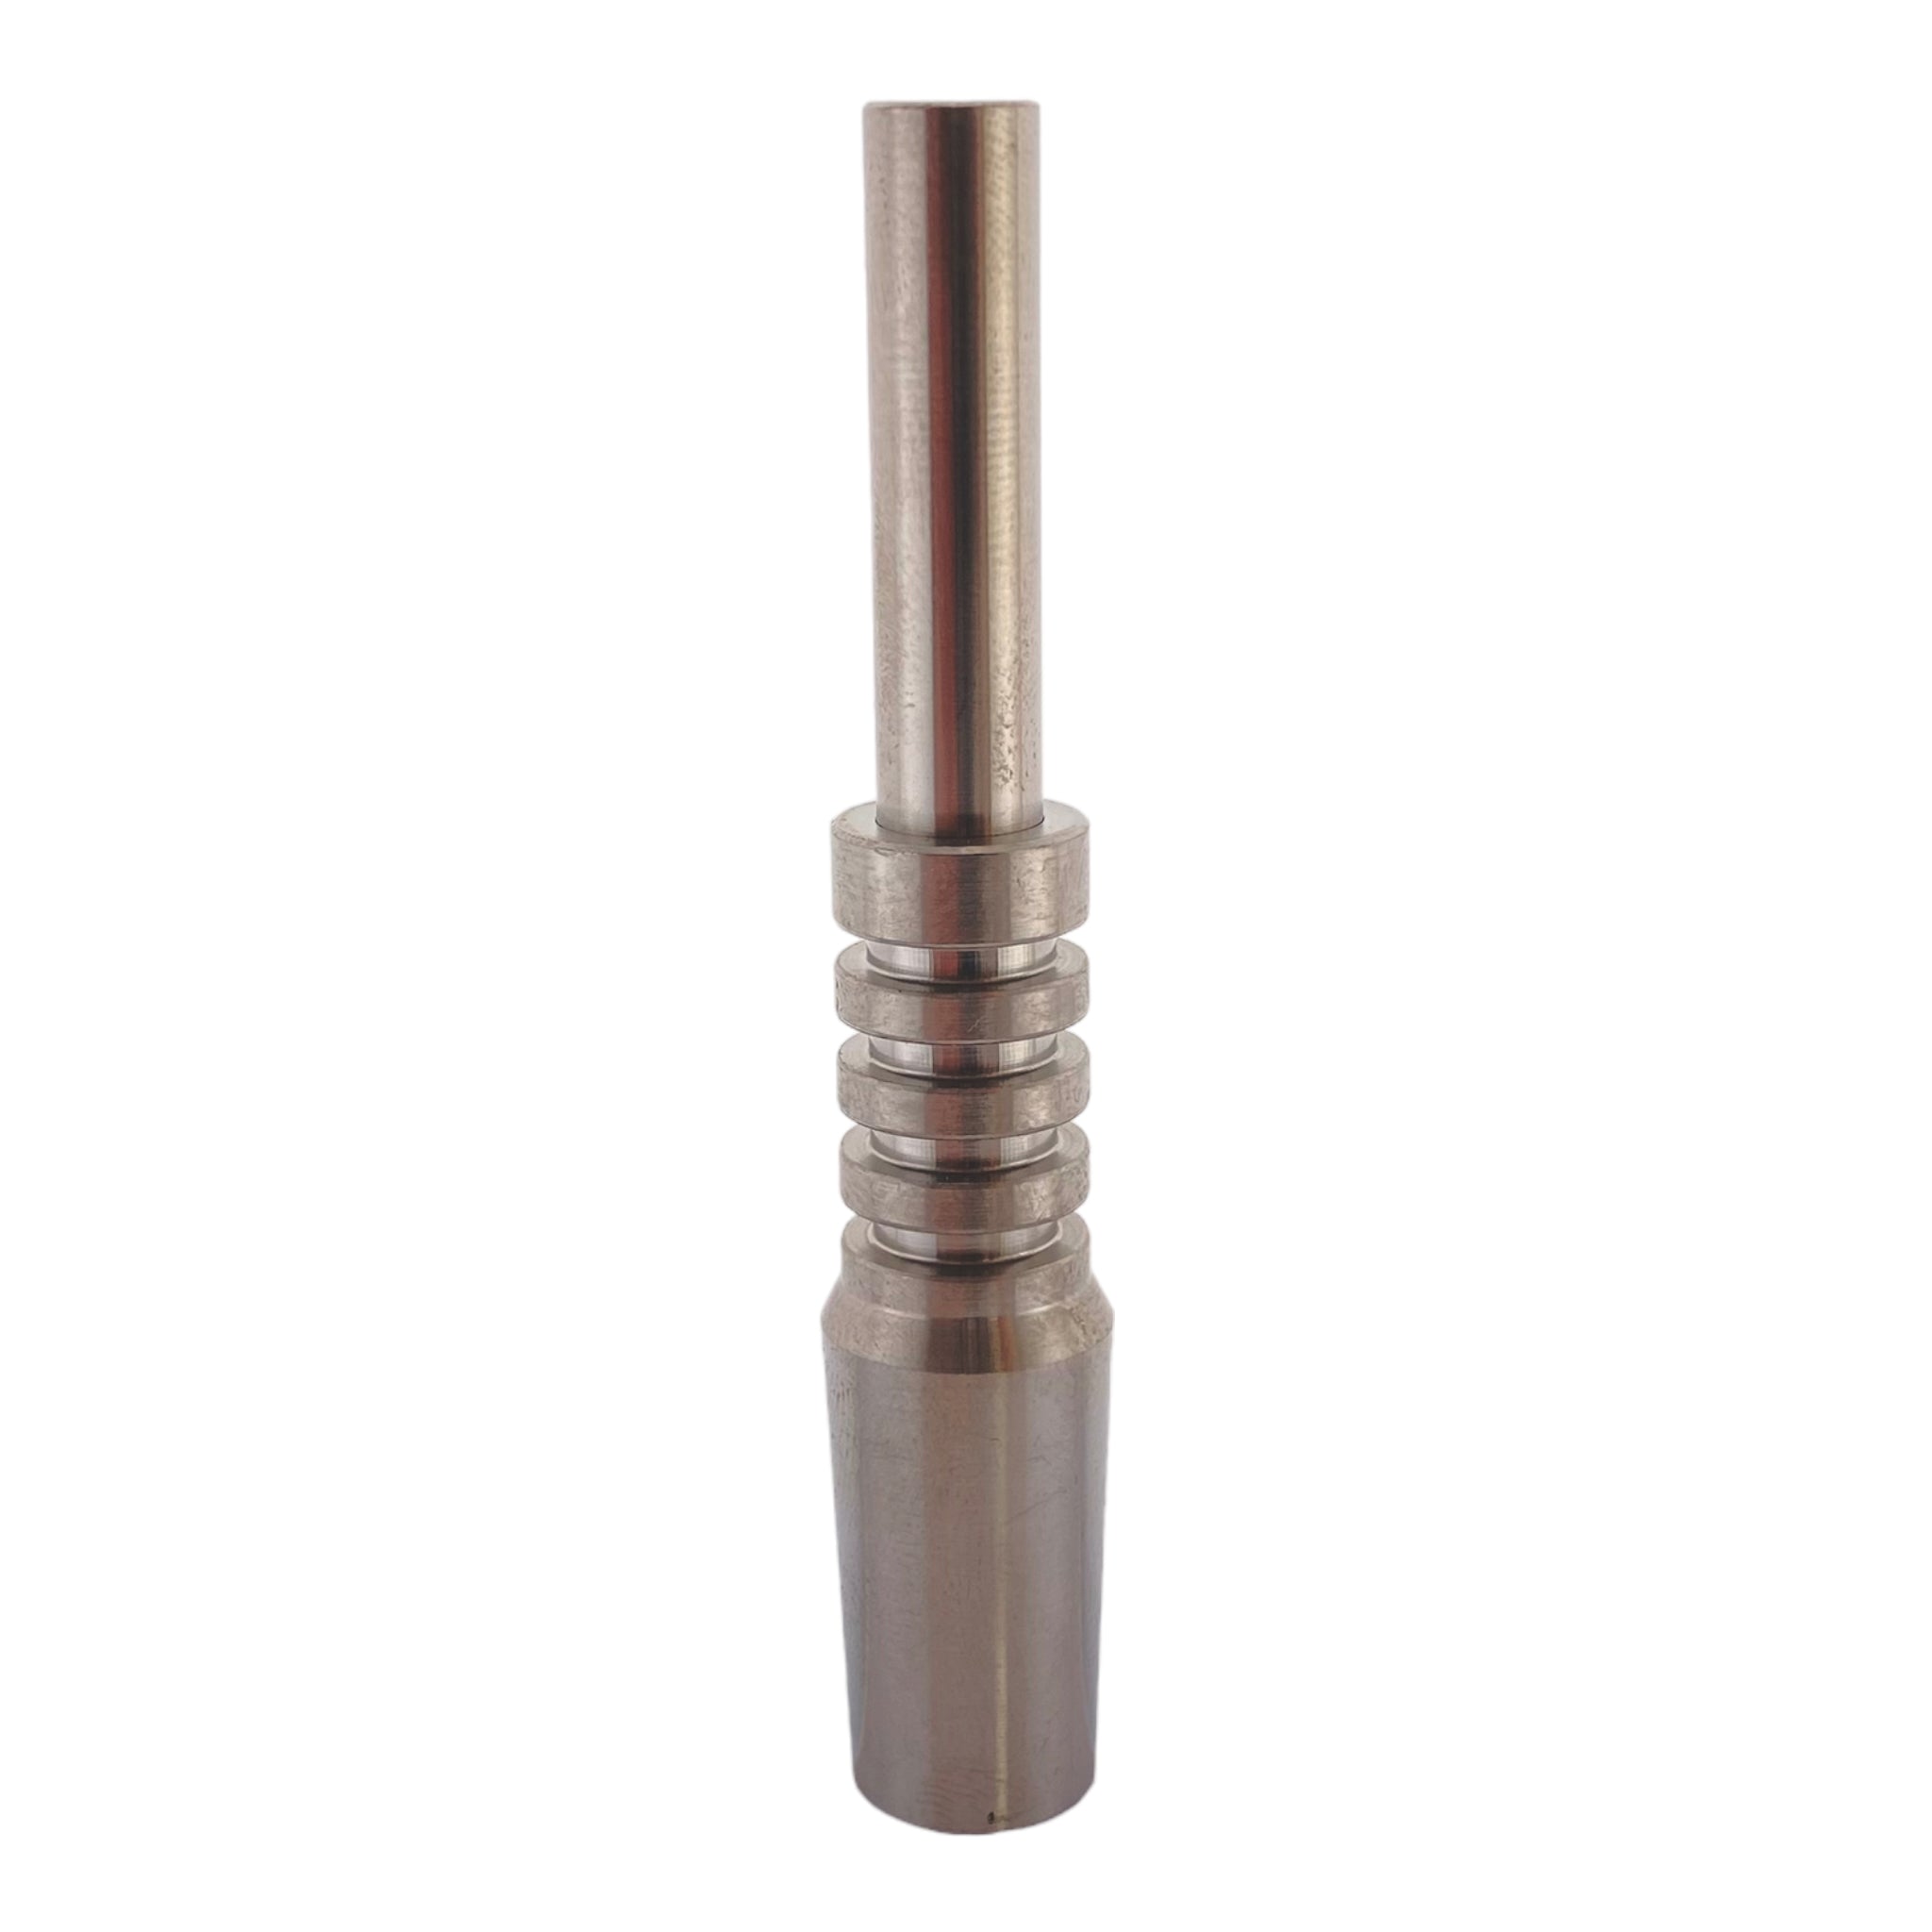 14mm Titanium Nectar Collector Replacement Tip